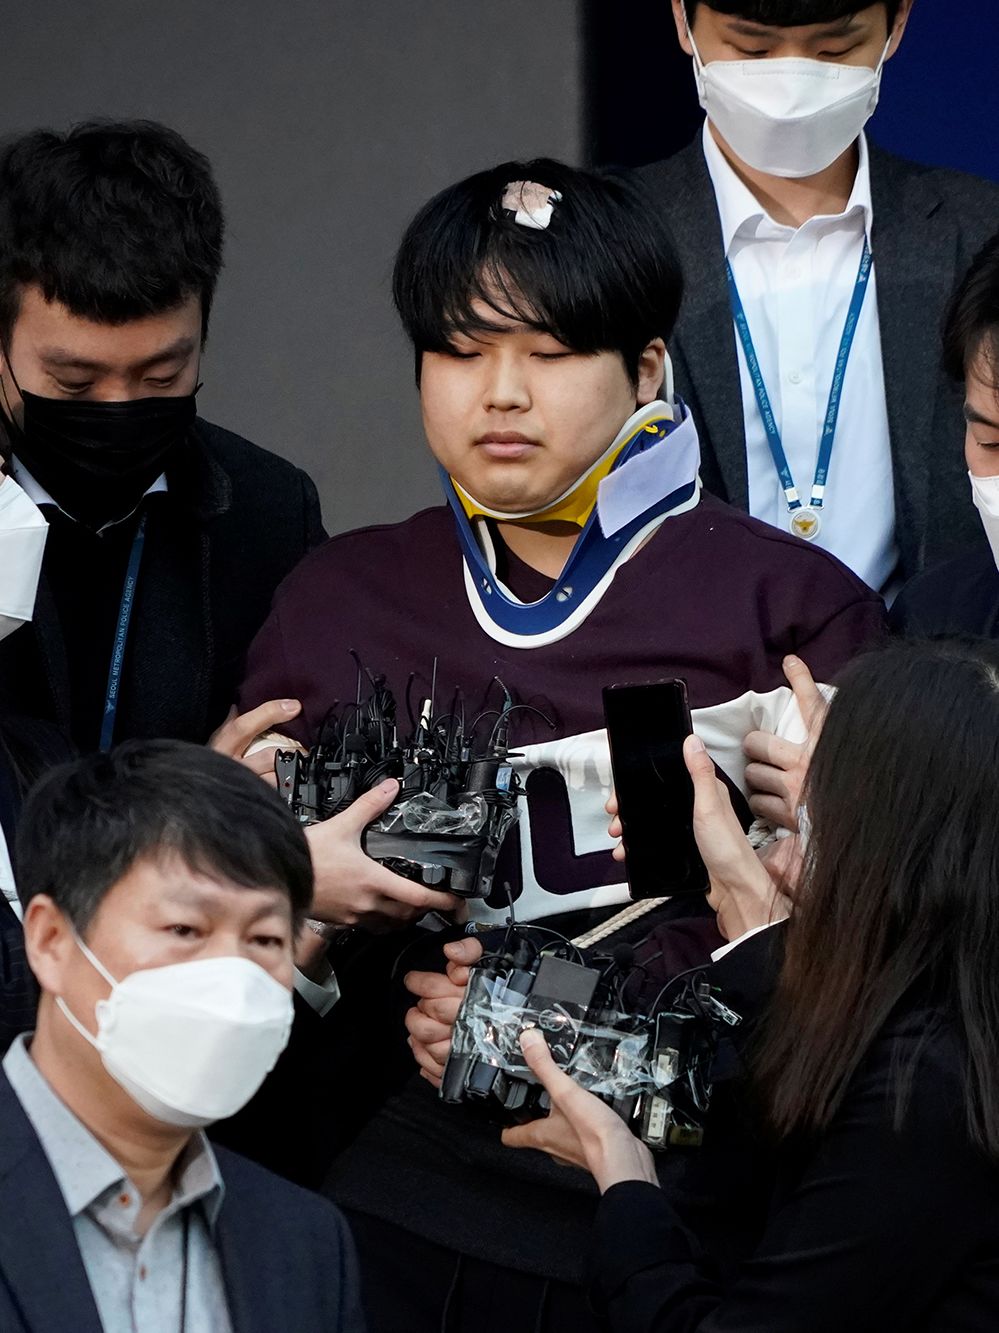 Blackmeling Rep Sex - South Korean leader of Telegram sexual blackmail ring sentenced to 40 years  | CNN